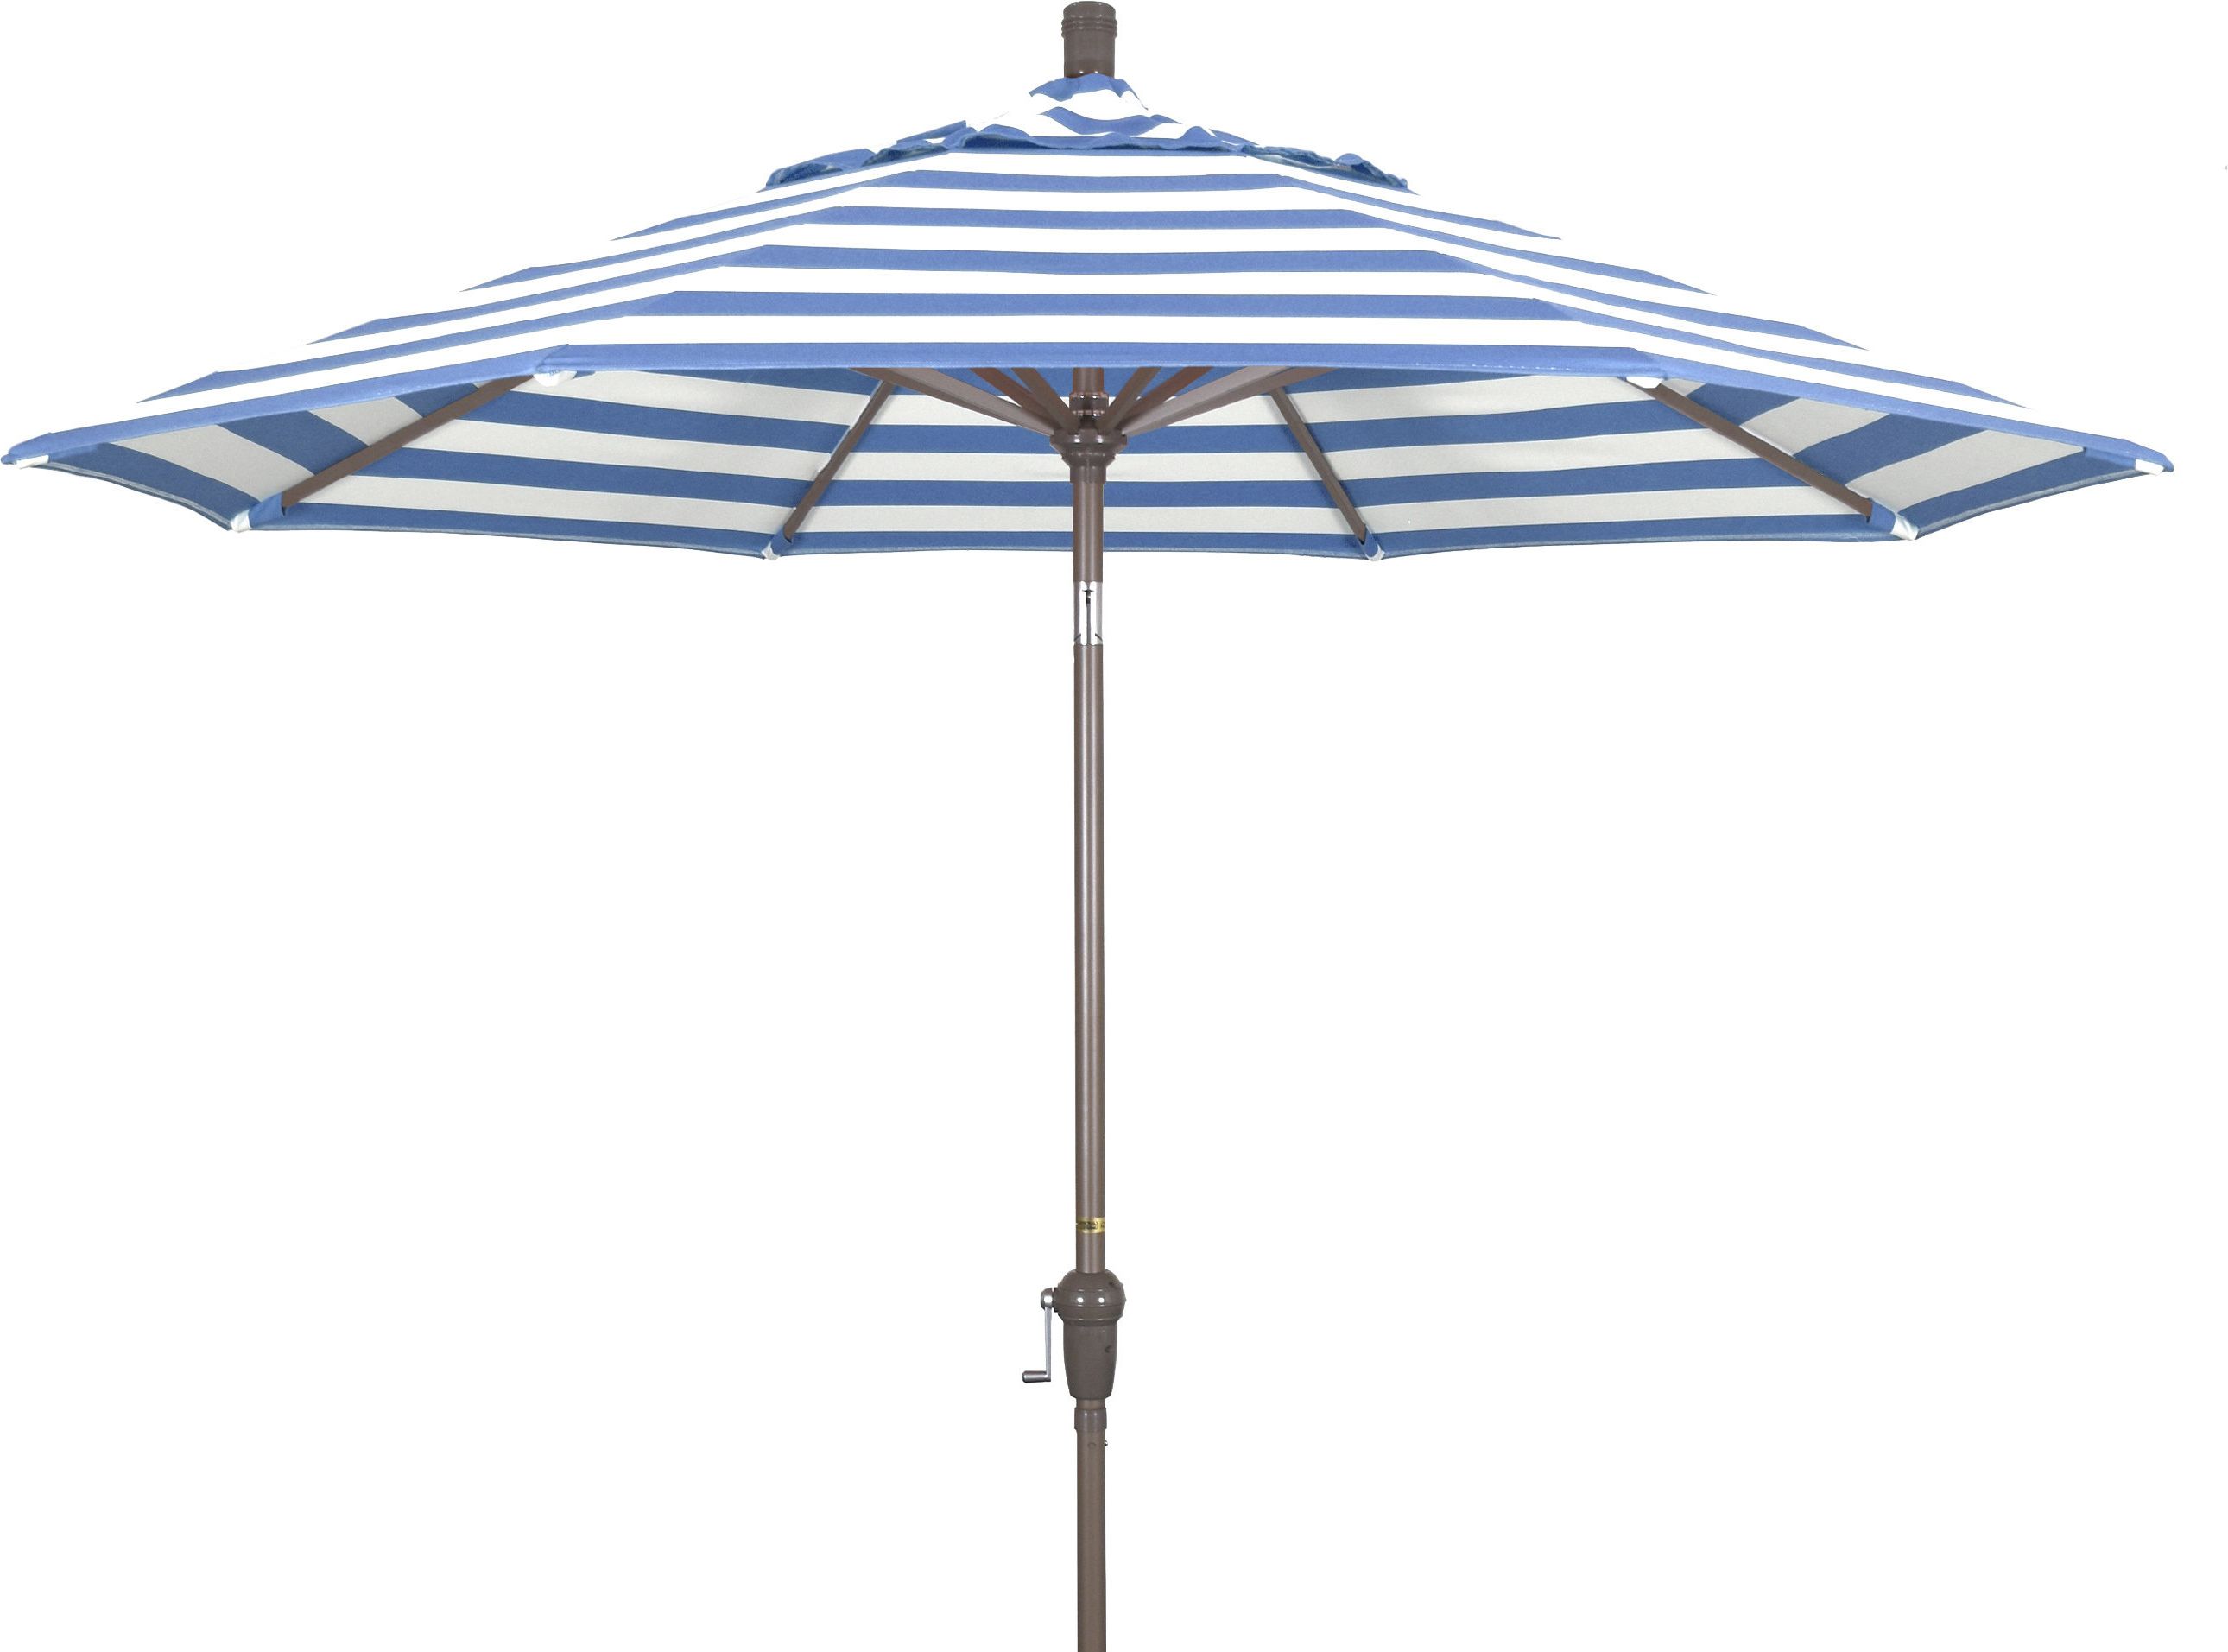 9' Market Sunbrella Umbrella Intended For Widely Used Caravelle Market Sunbrella Umbrellas (View 15 of 20)